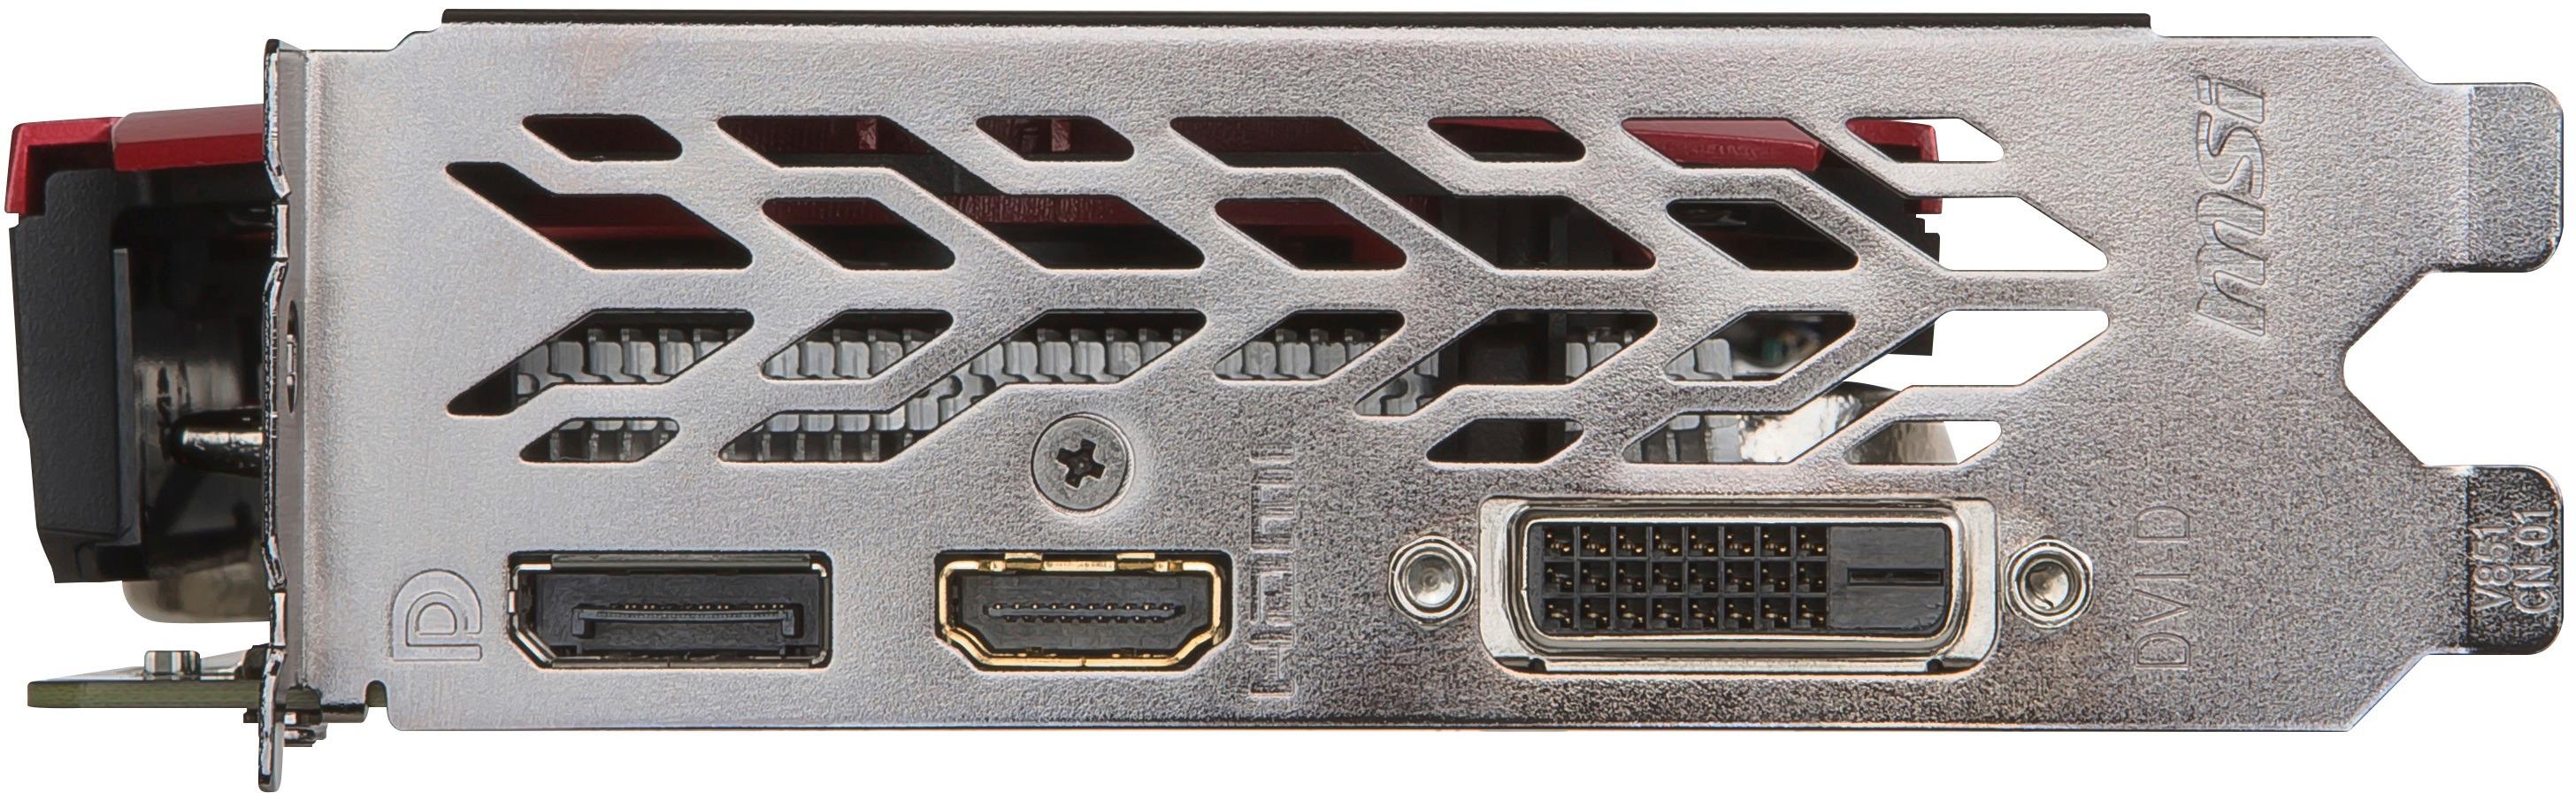 Best Buy: MSI NVIDIA GeForce GTX 1050 Ti GAMING X BV 4GB GDDR5 PCI